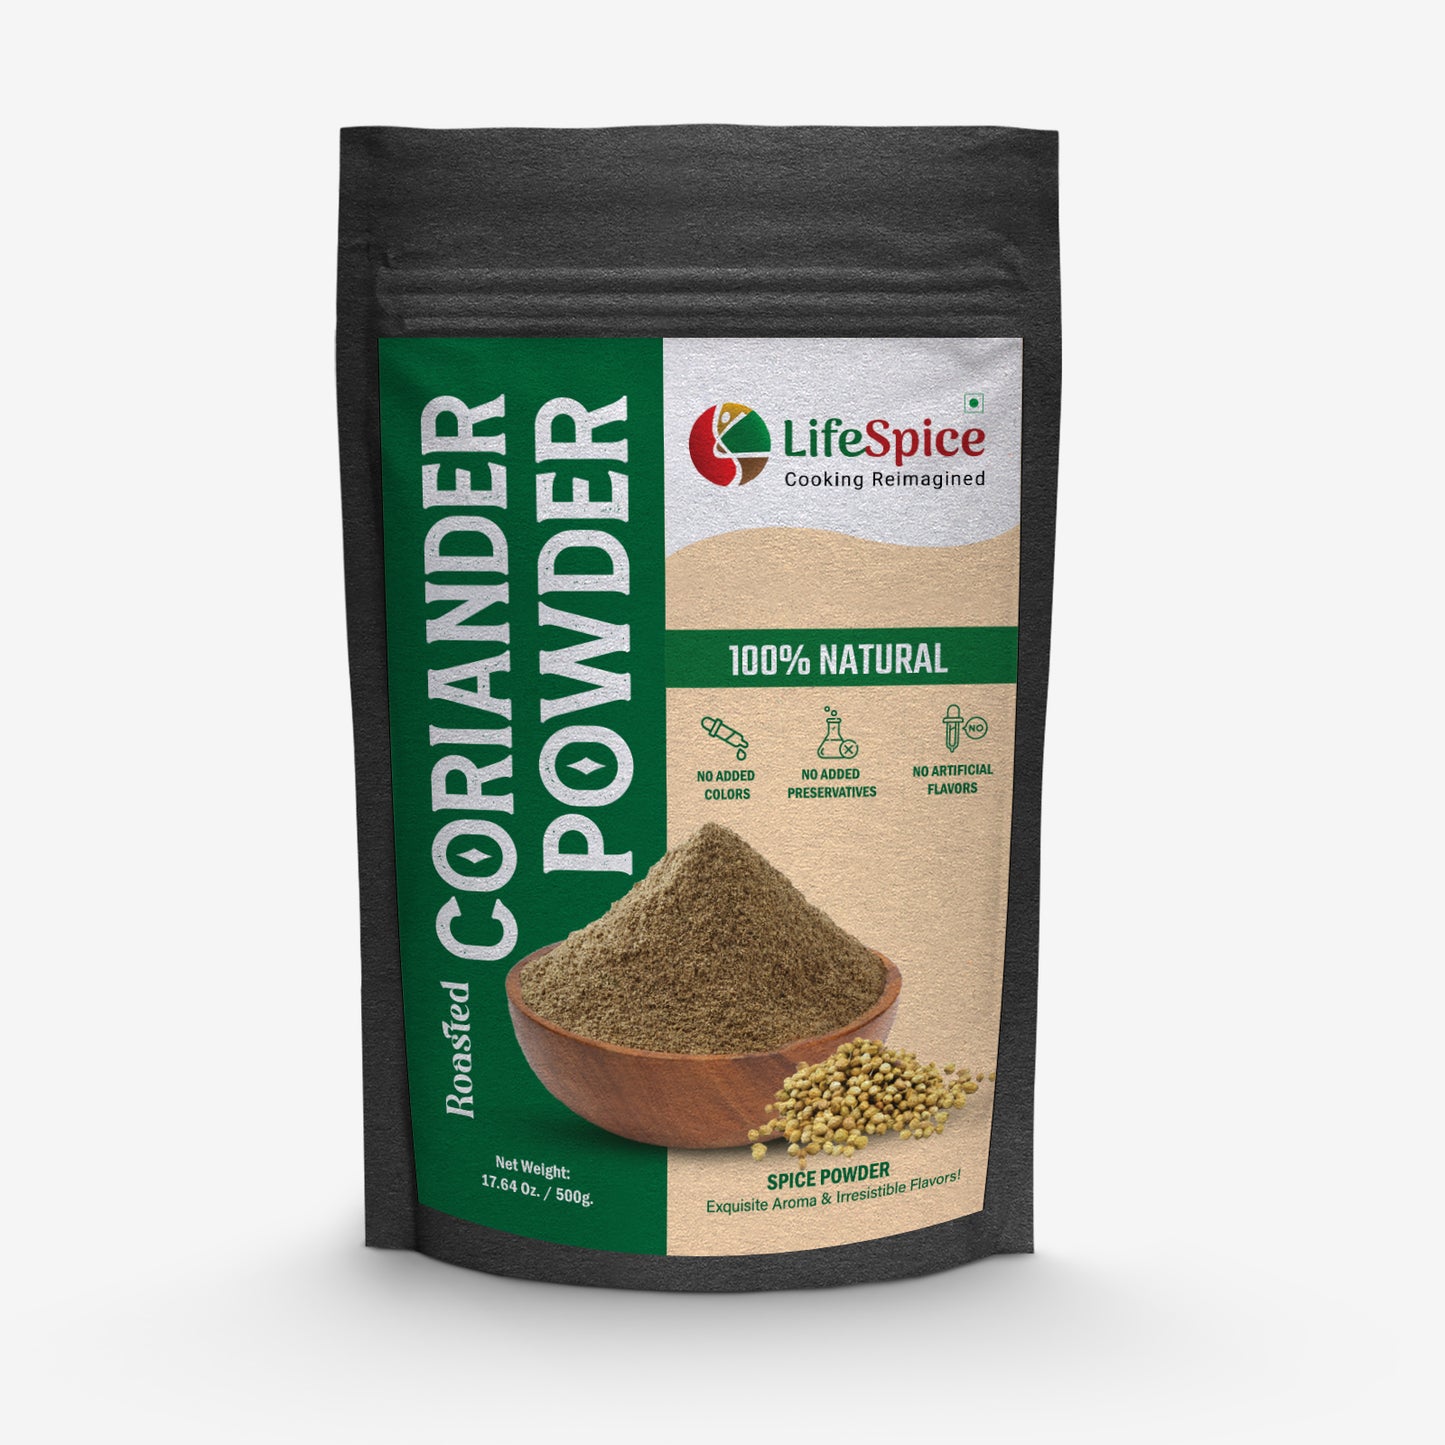 Lifespice Roasted Coriander Powder - 500g pouch